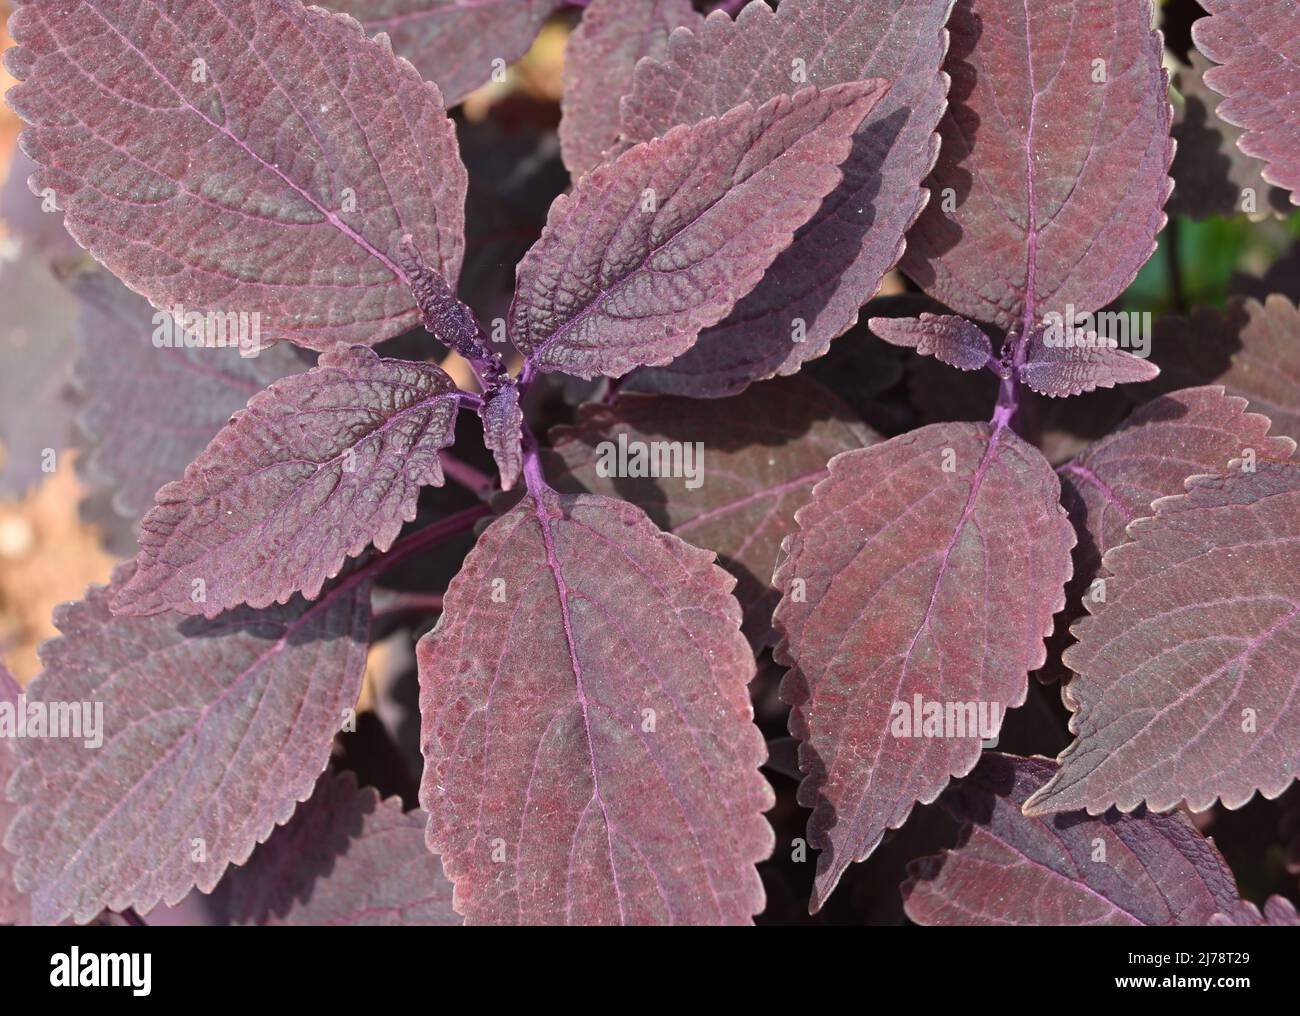 Overhead view of growing leaves of dark purple Dark Star’ coleus Plectranthus scutellarioides plant Stock Photo